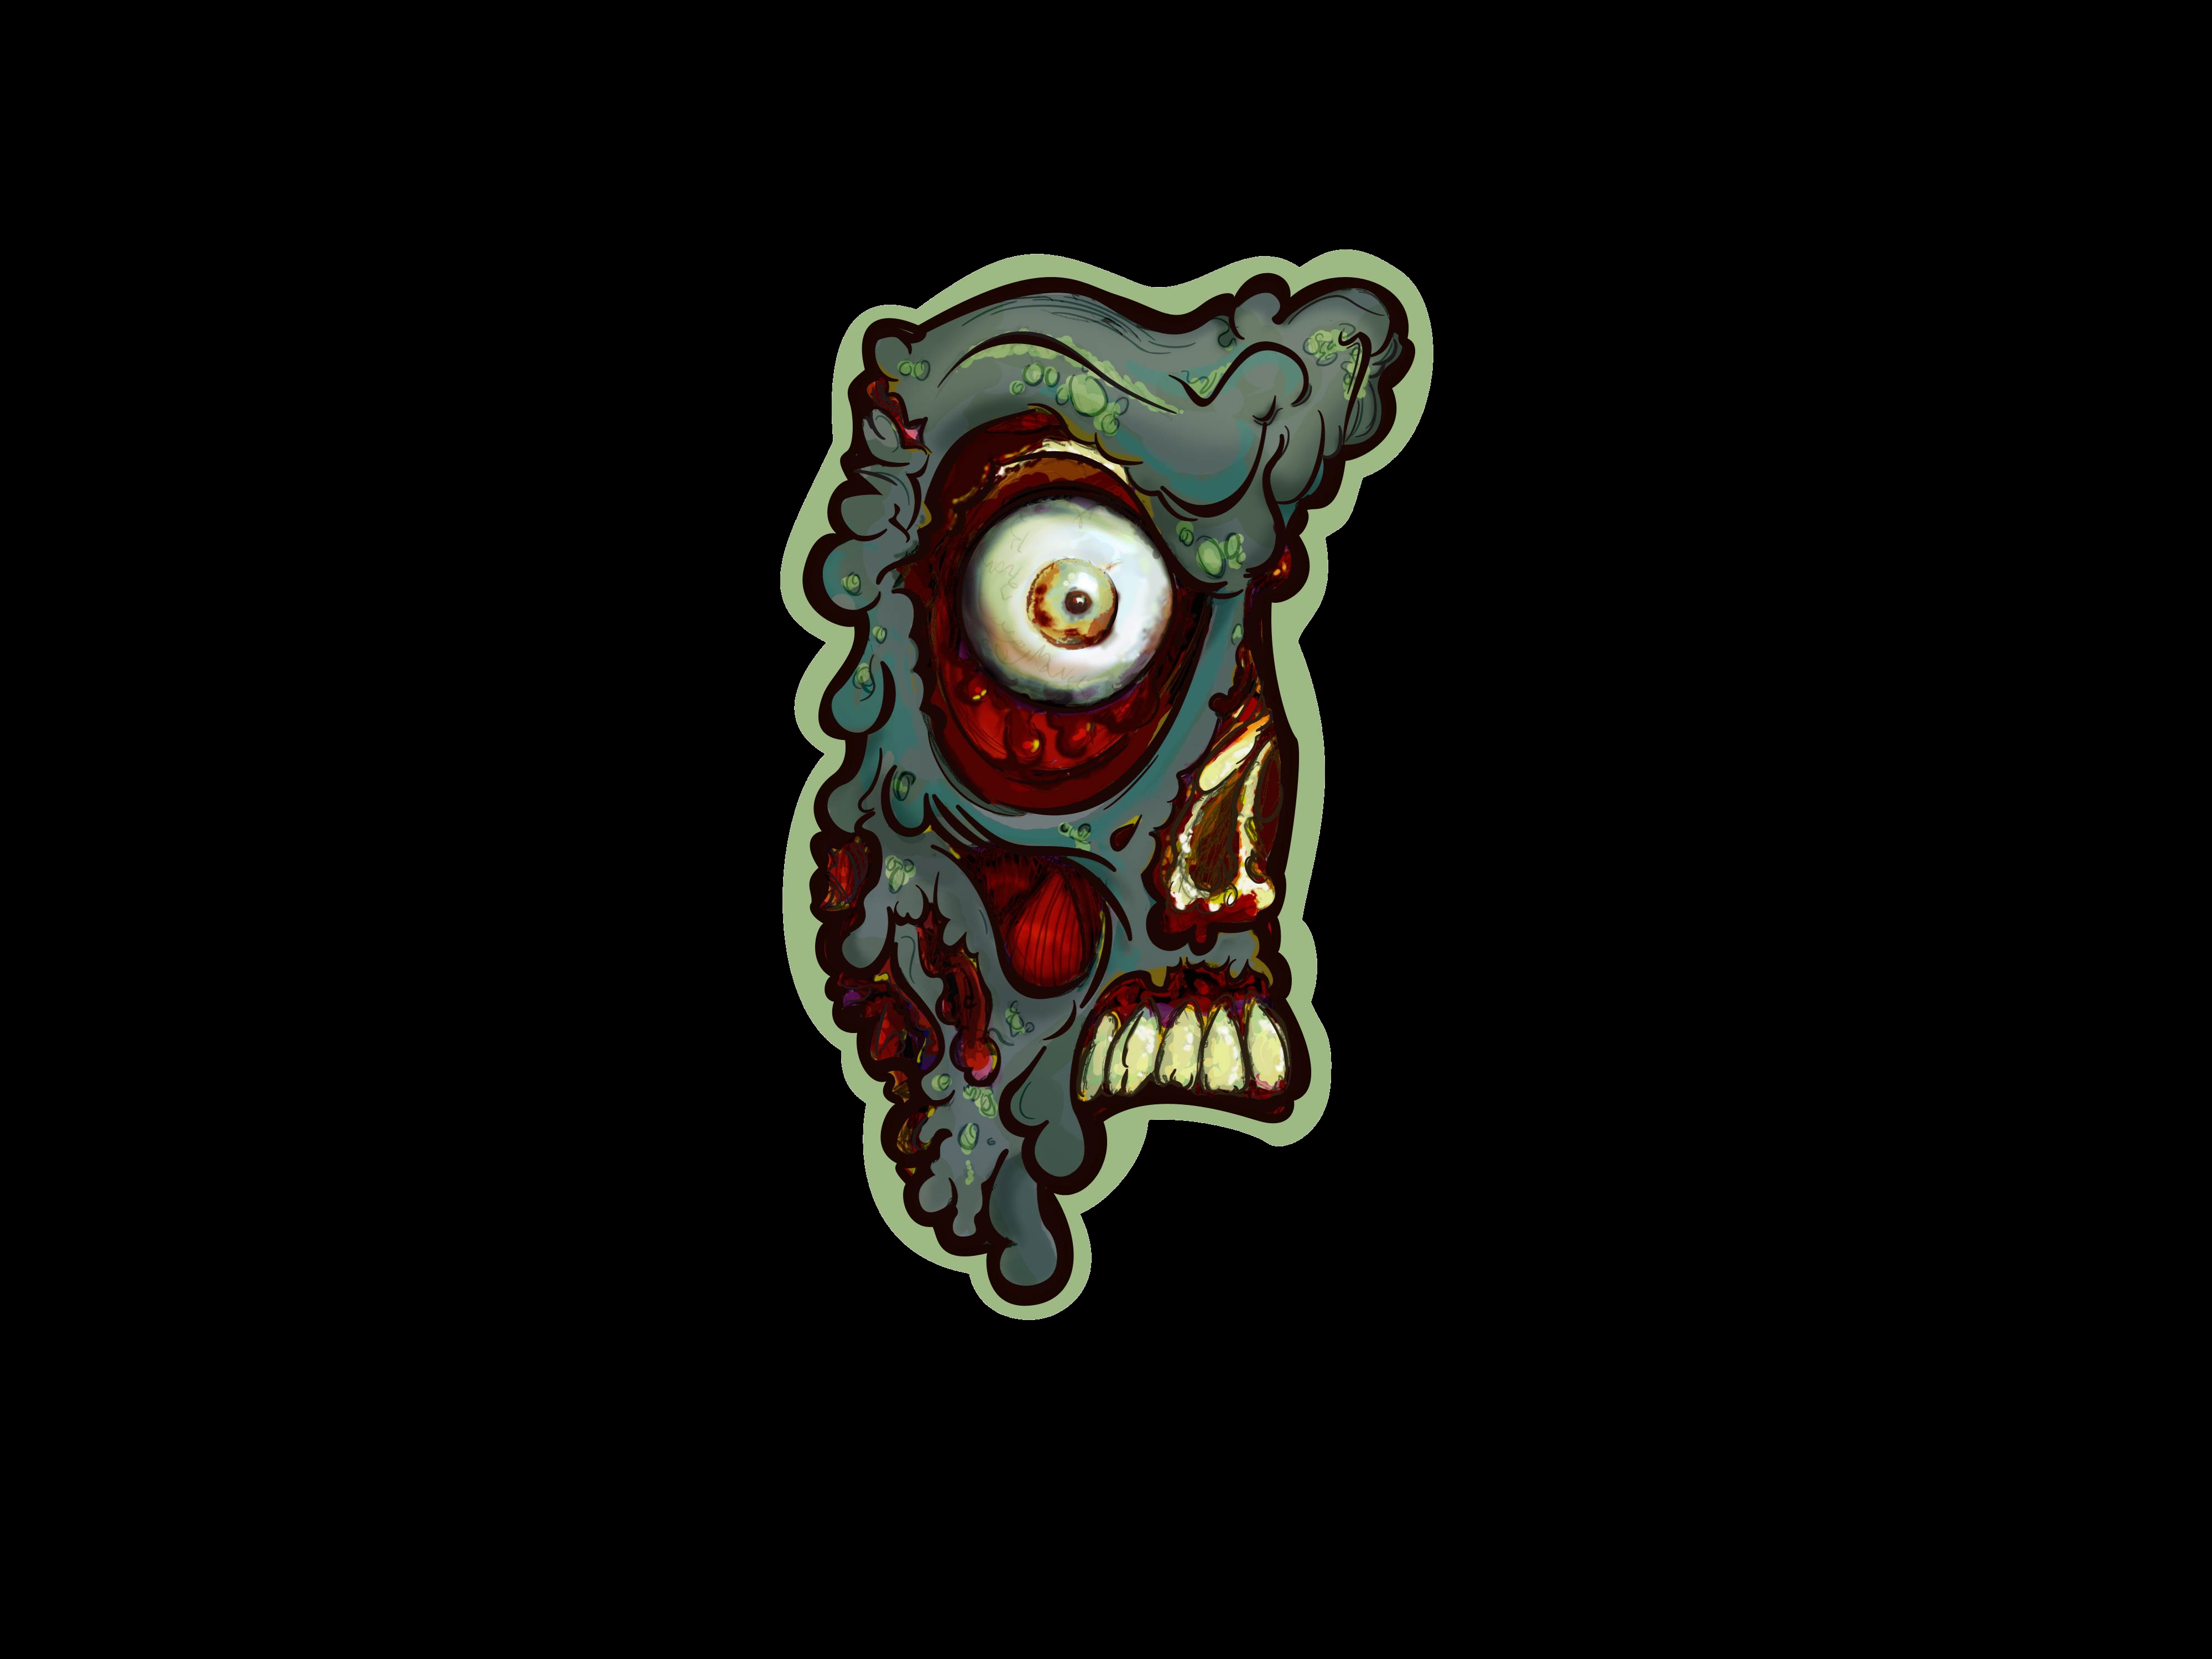 Cool Backgrounds dark Zombie